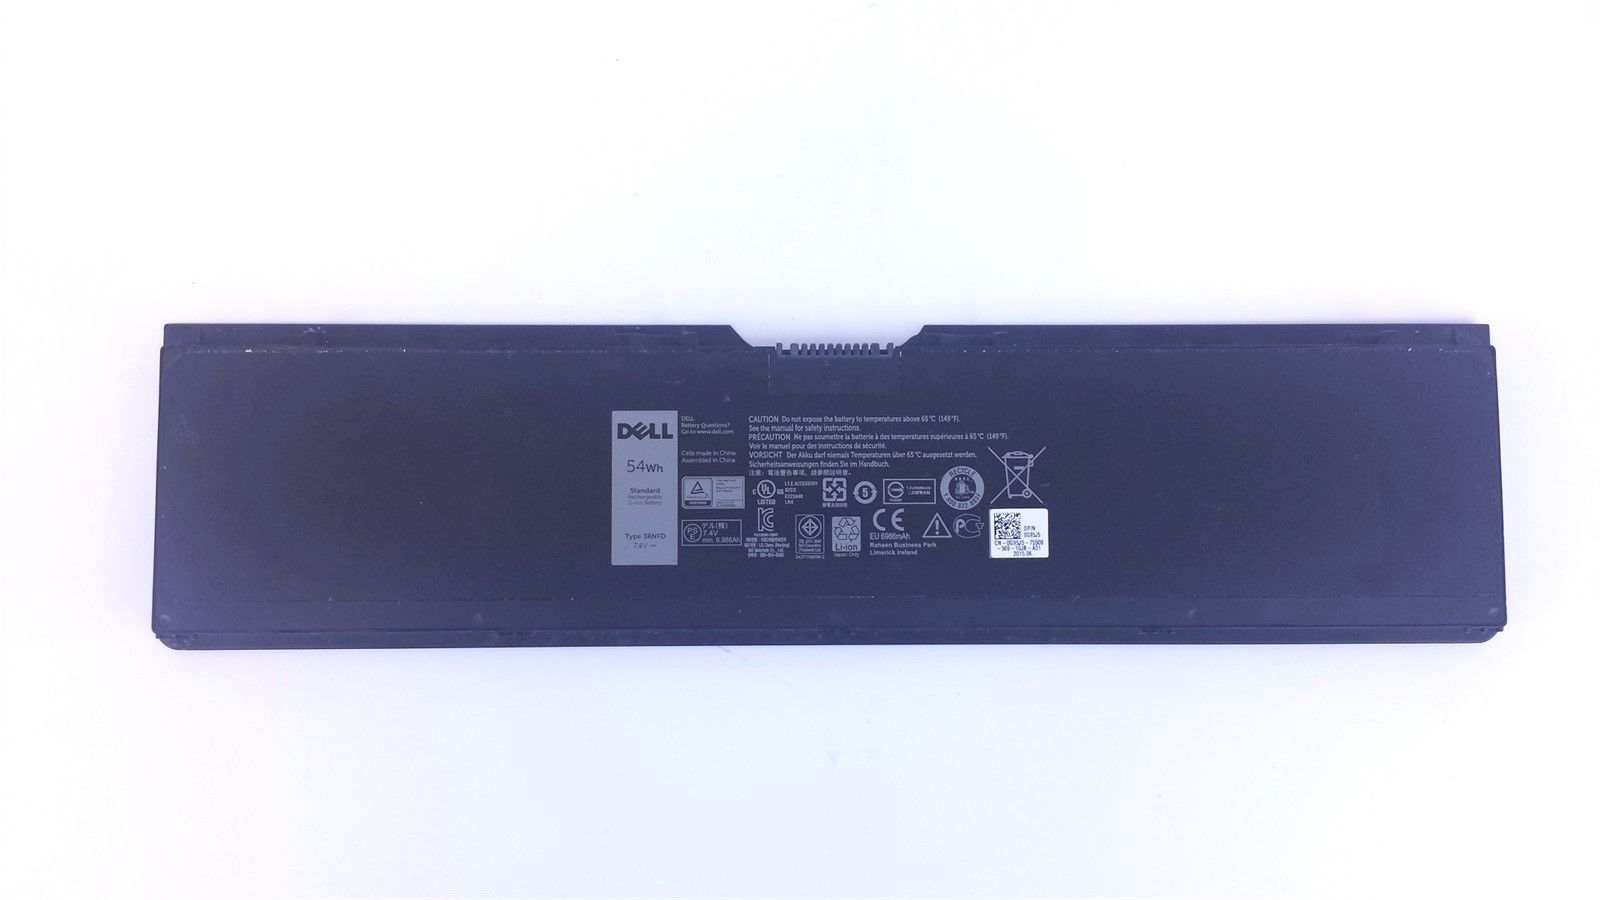 Dell Latitude E7450 Genuine Laptop Battery 54Wh 7.4V 6986mAh G95J5 0G95J5